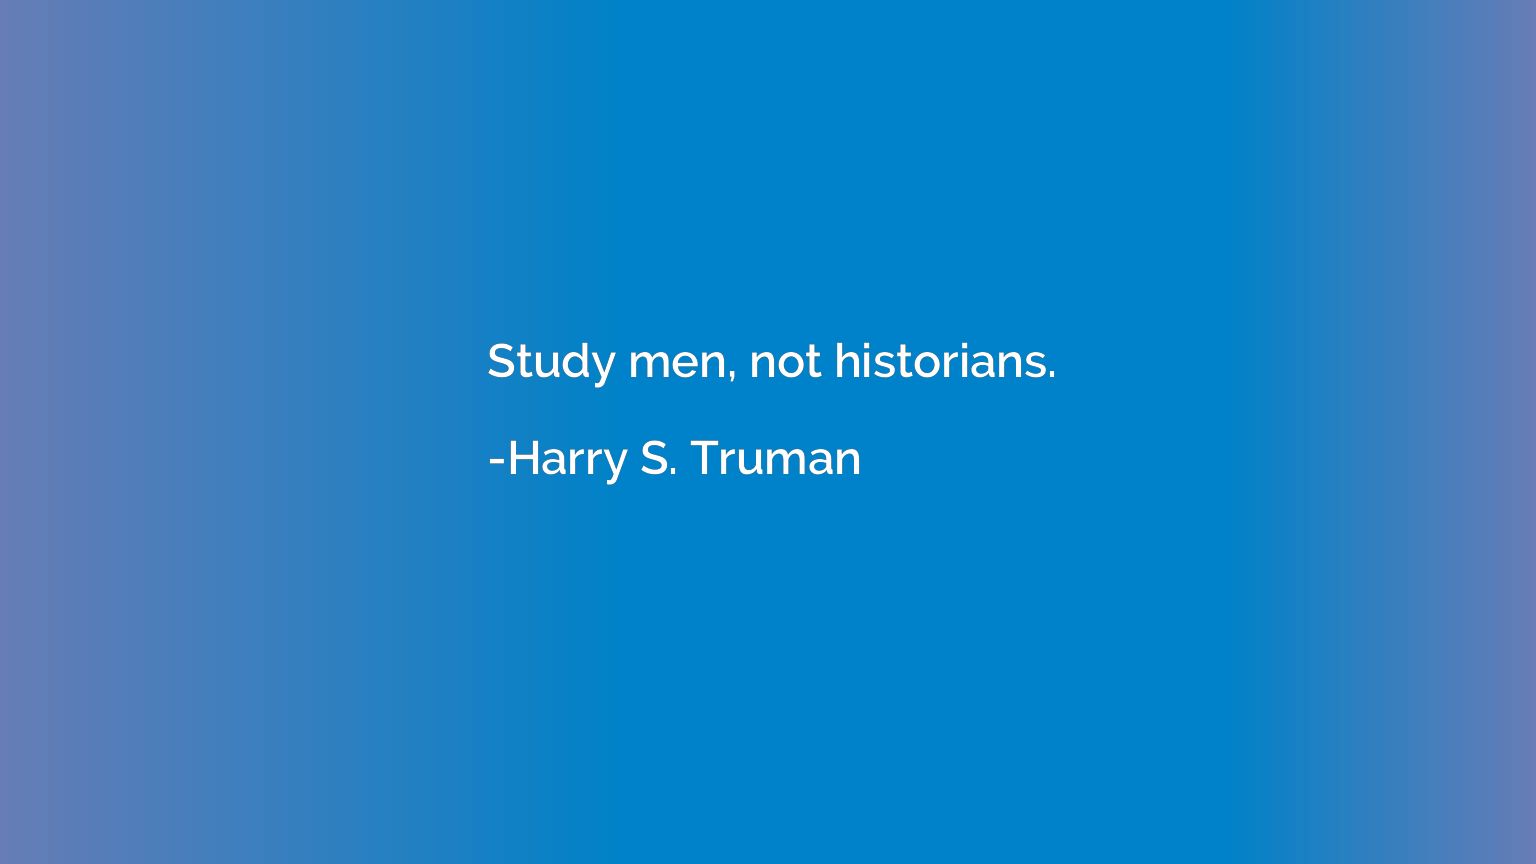 Study men, not historians.